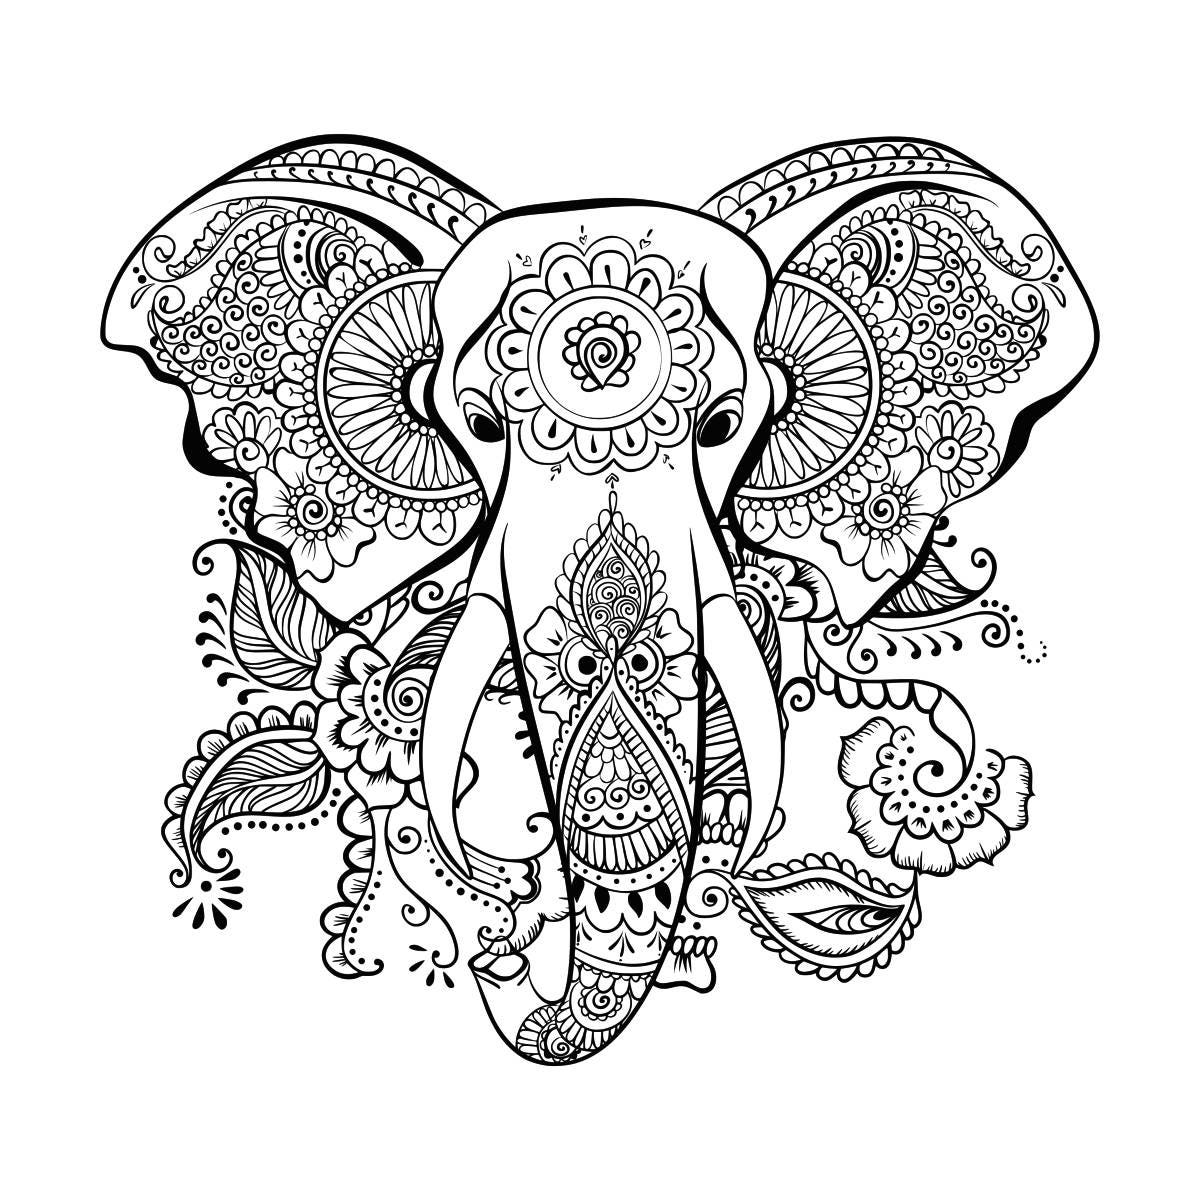 Download Ethnic Elephant SVG Mandala Elephant SVG Elephant head SVG